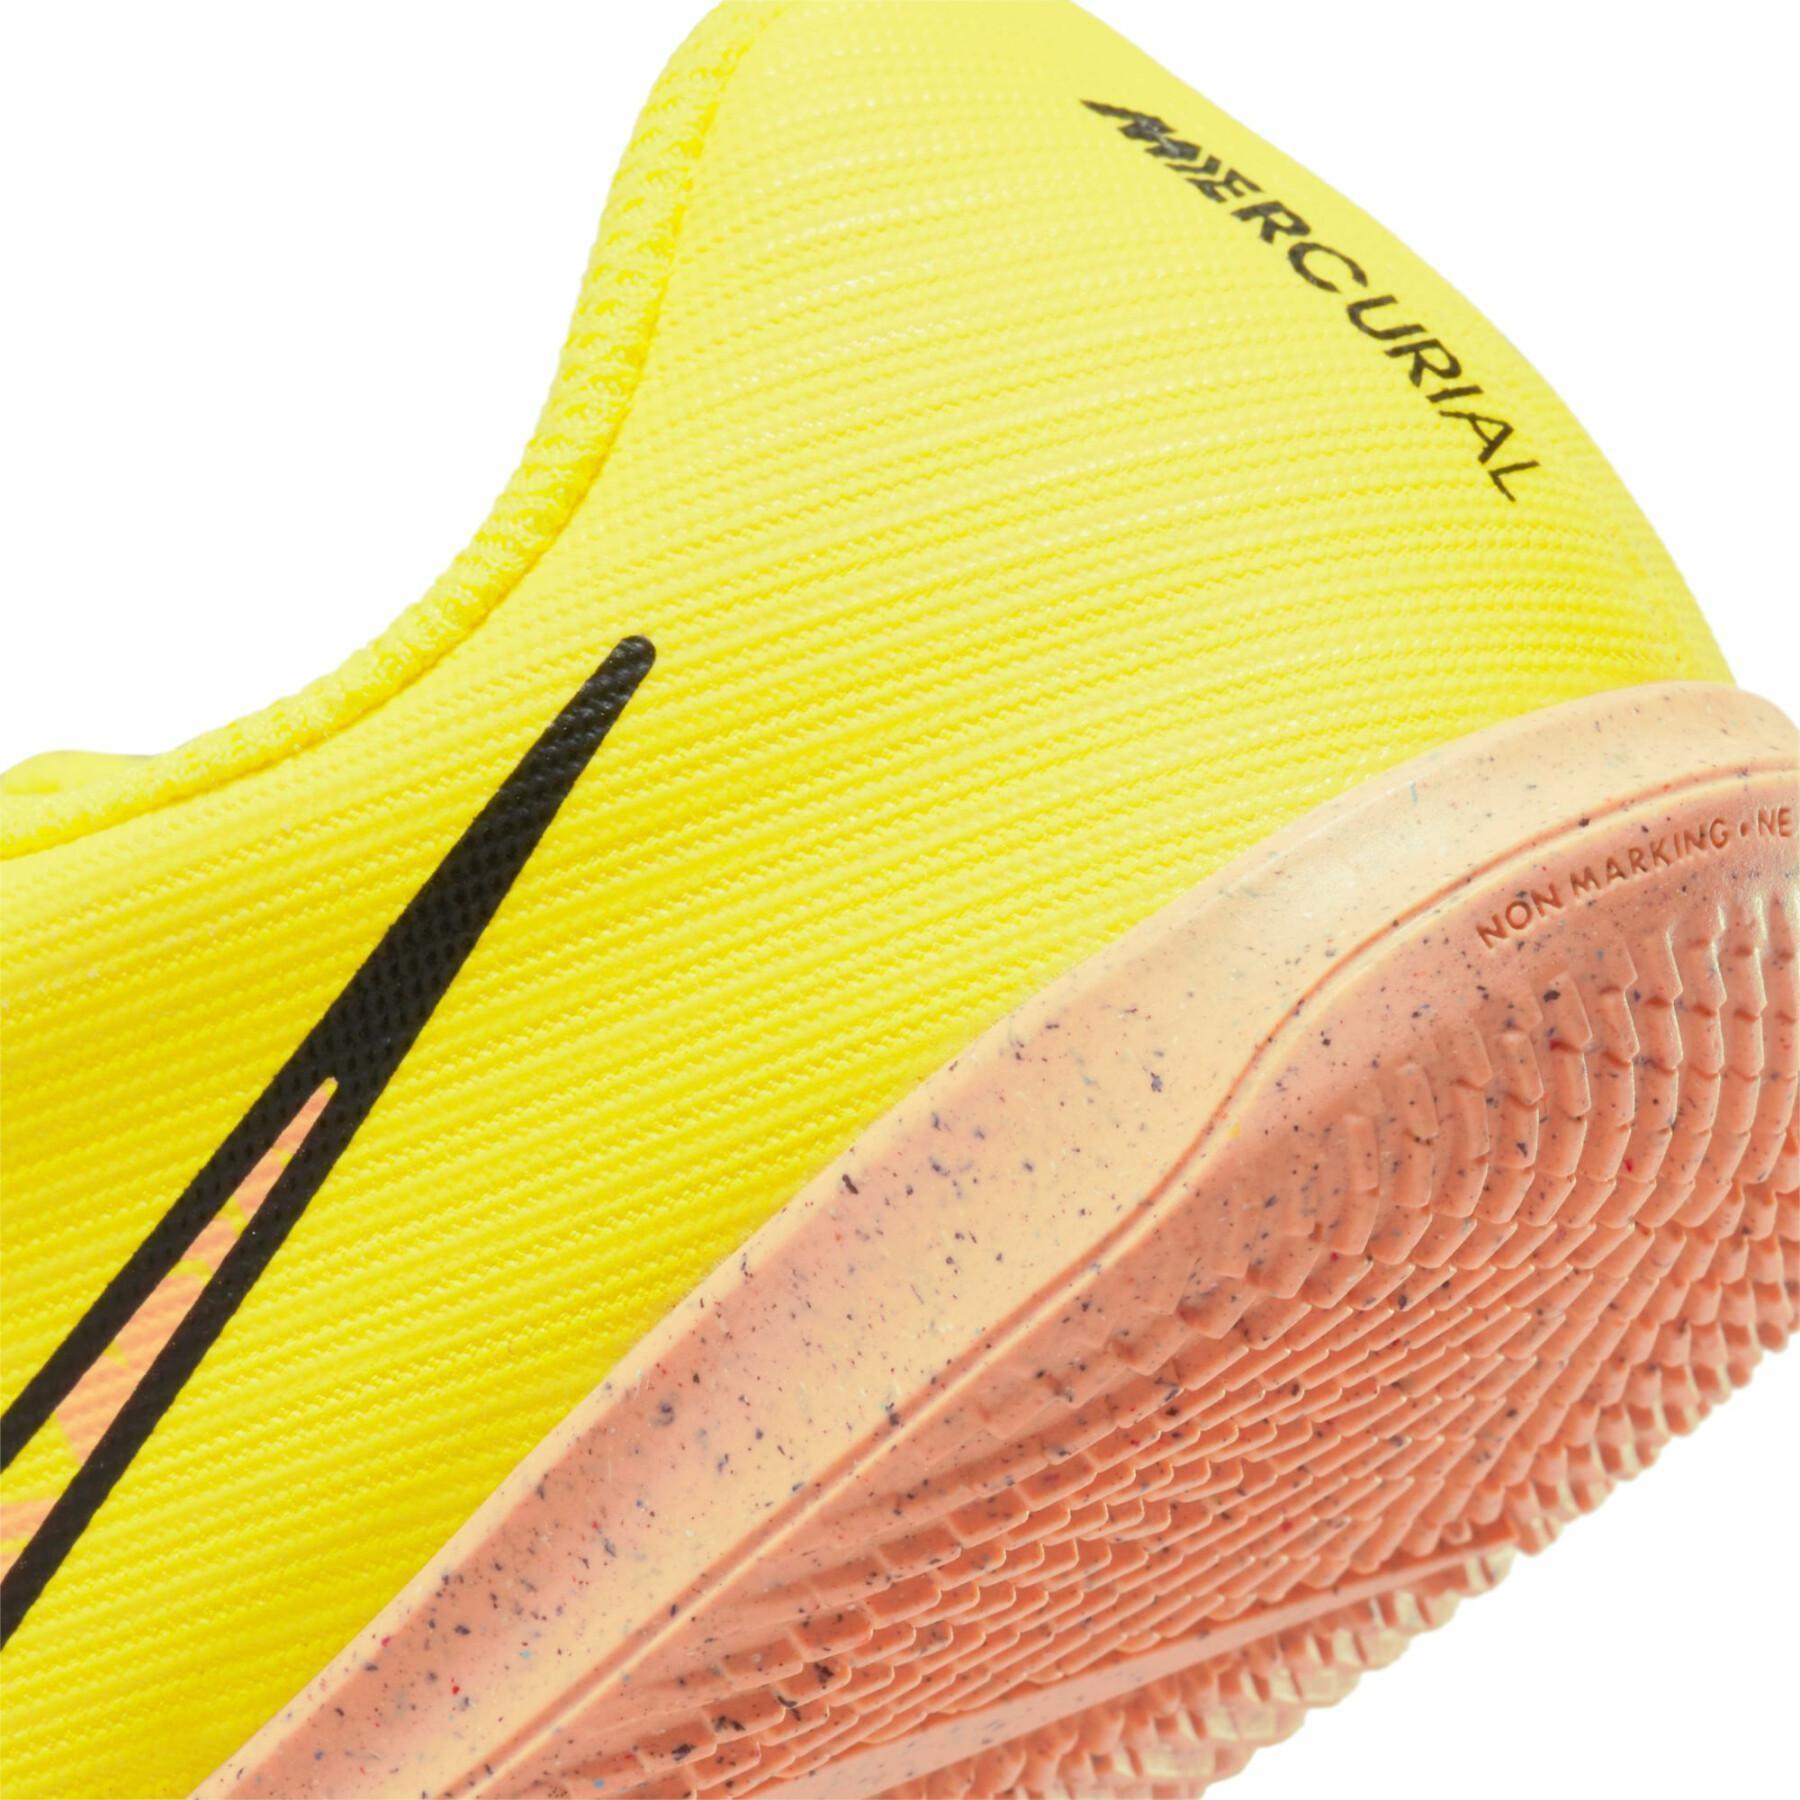 Chaussures de football enfant Nike Mercurial Vapor 15 Club IC - Lucent Pack